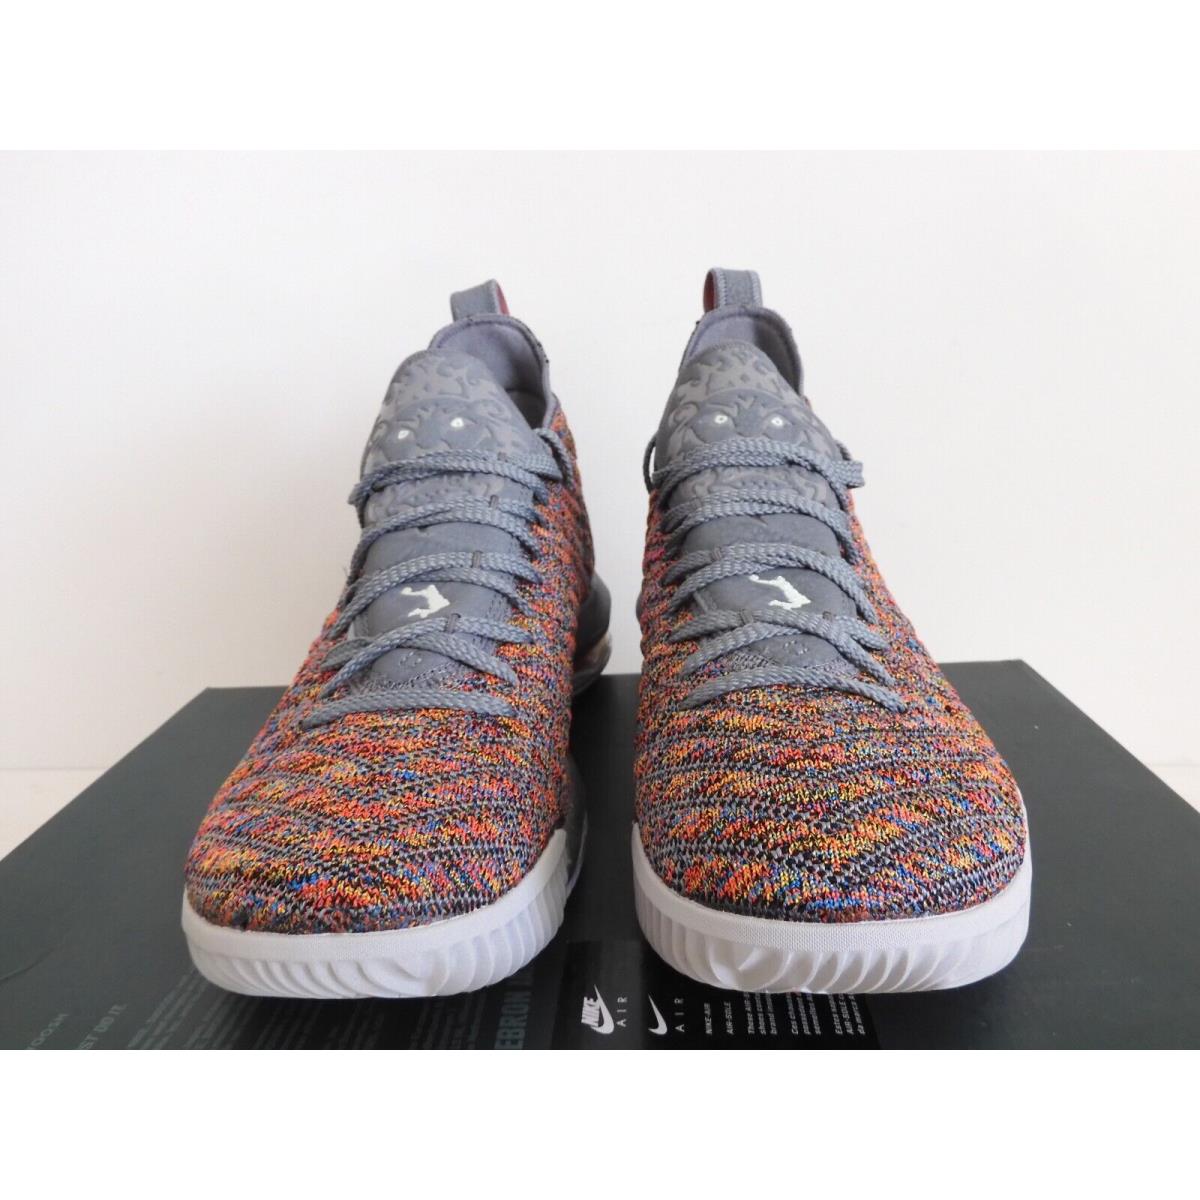 Nike shoes LeBron - Multicolor 1